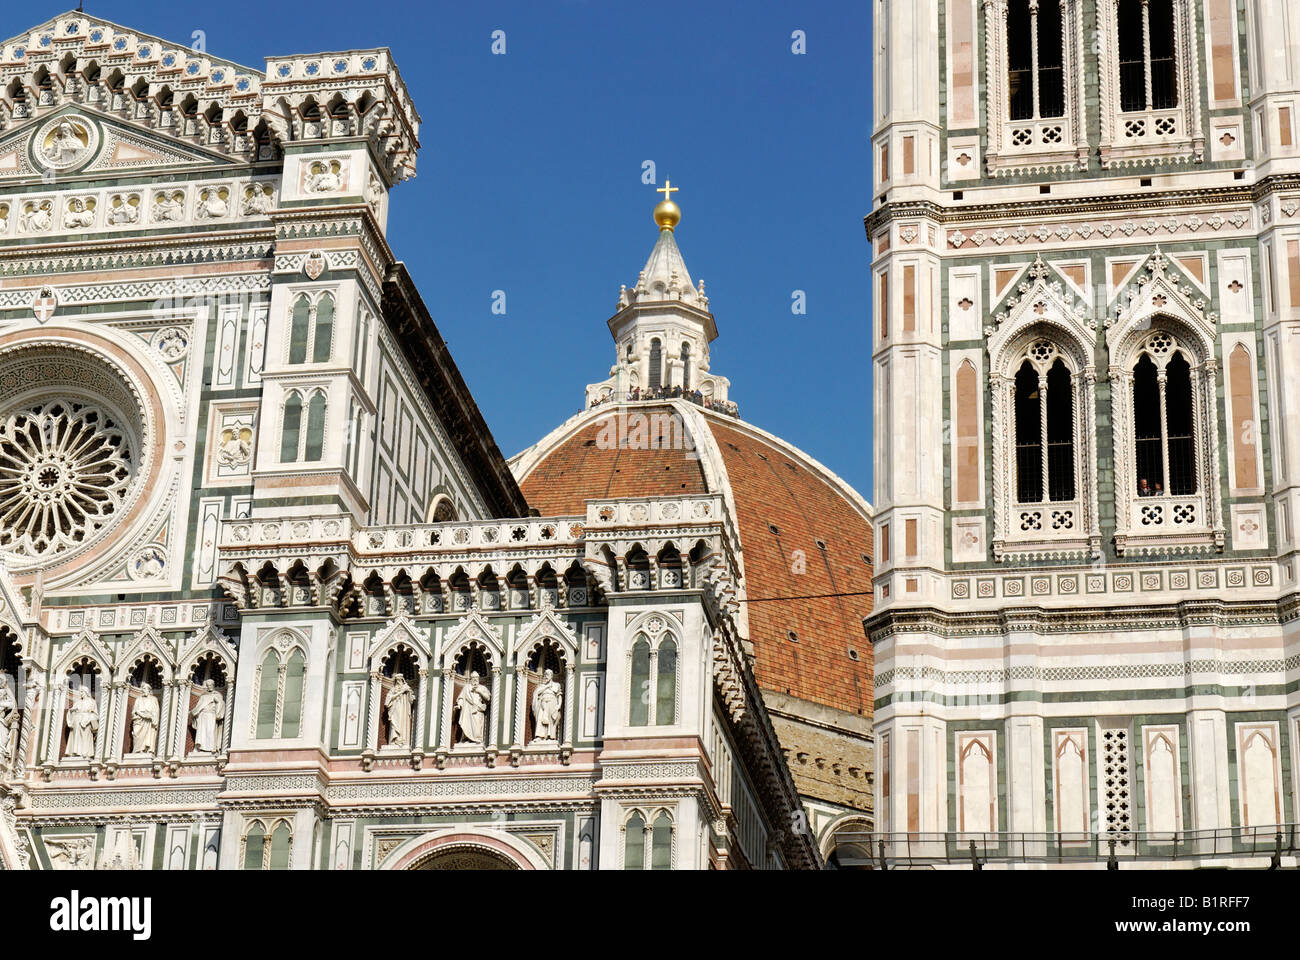 Cattedrale di Santa Maria del Fiore o Duomo di Firenze mostra Brunelleschi's la cupola e il Campanile o torre campanaria, Firenze, U Foto Stock